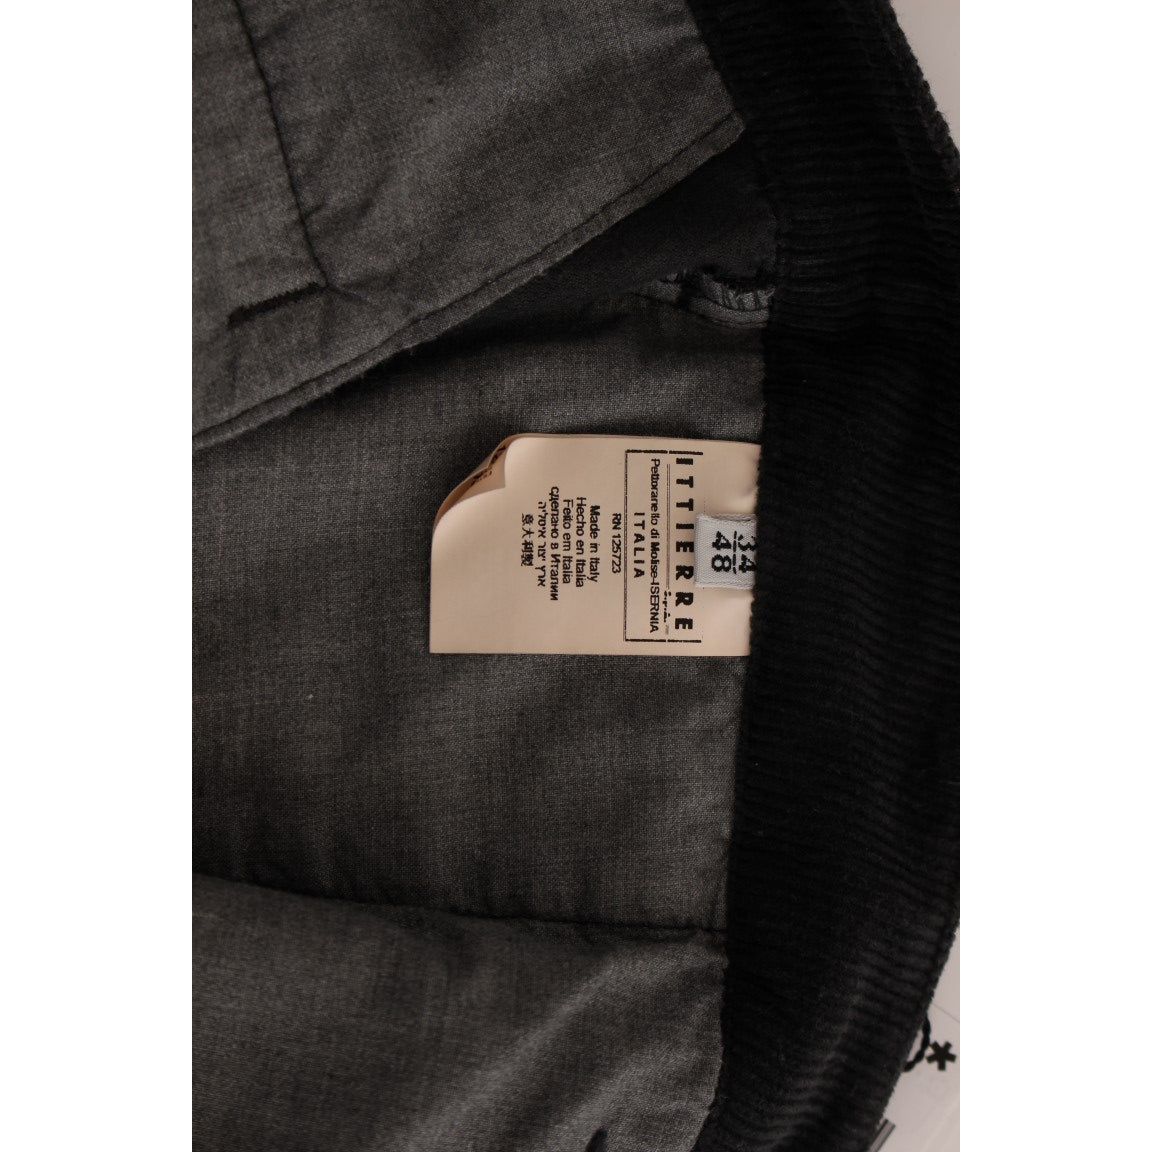 GF Ferre Elegant Black Cotton Corduroy Pants Jeans & Pants black-corduroy-cotton-straight-fit-pants 53278-black-corduroy-cotton-straight-fit-pants-7.jpg